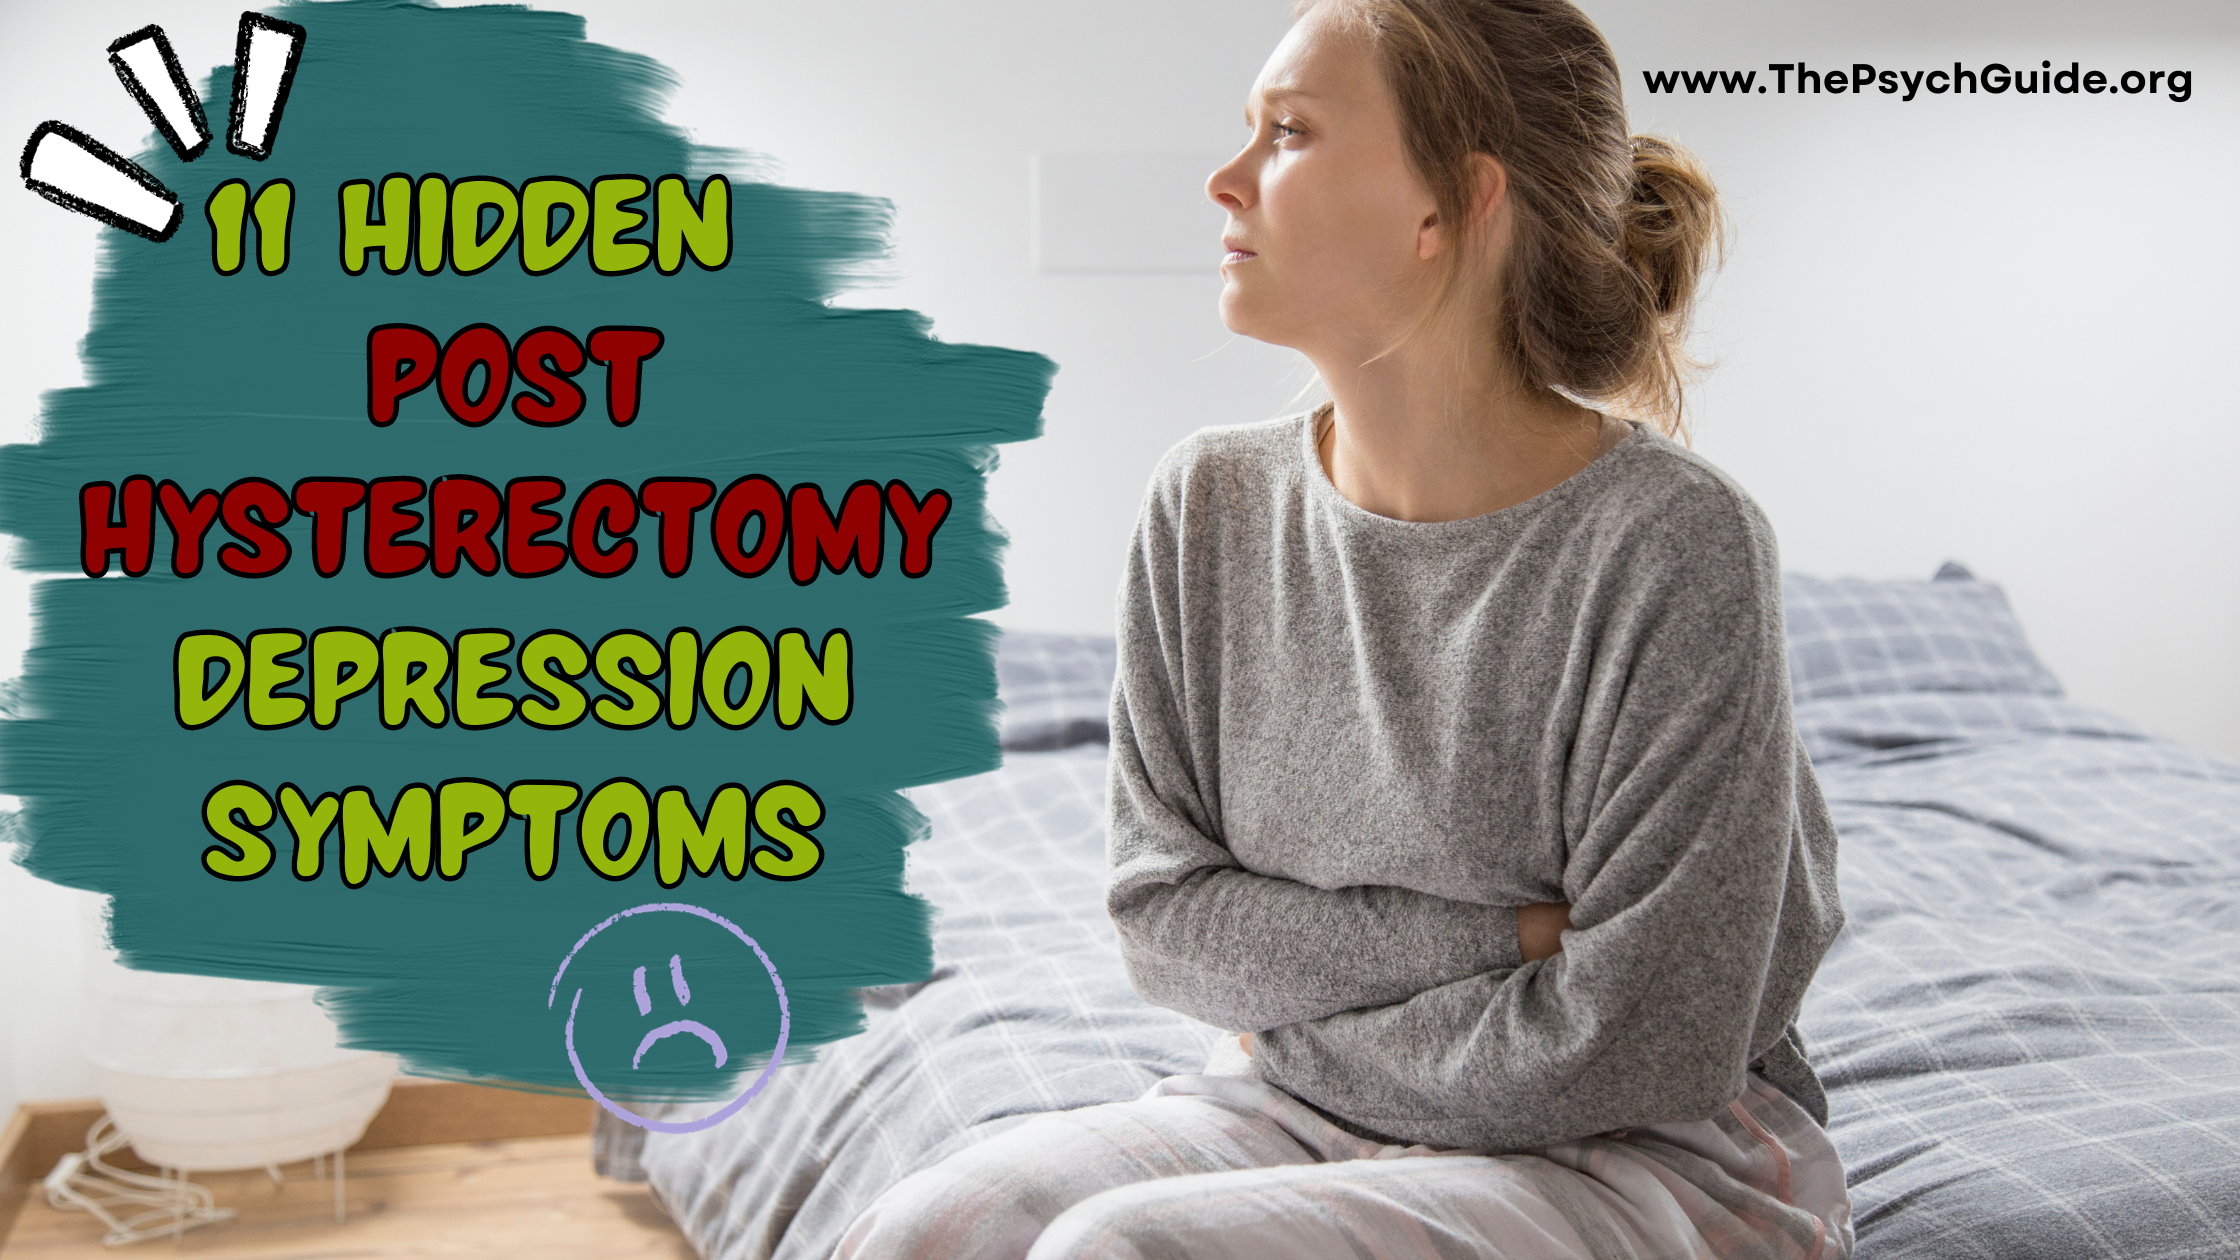 Post hysterectomy depression symptoms